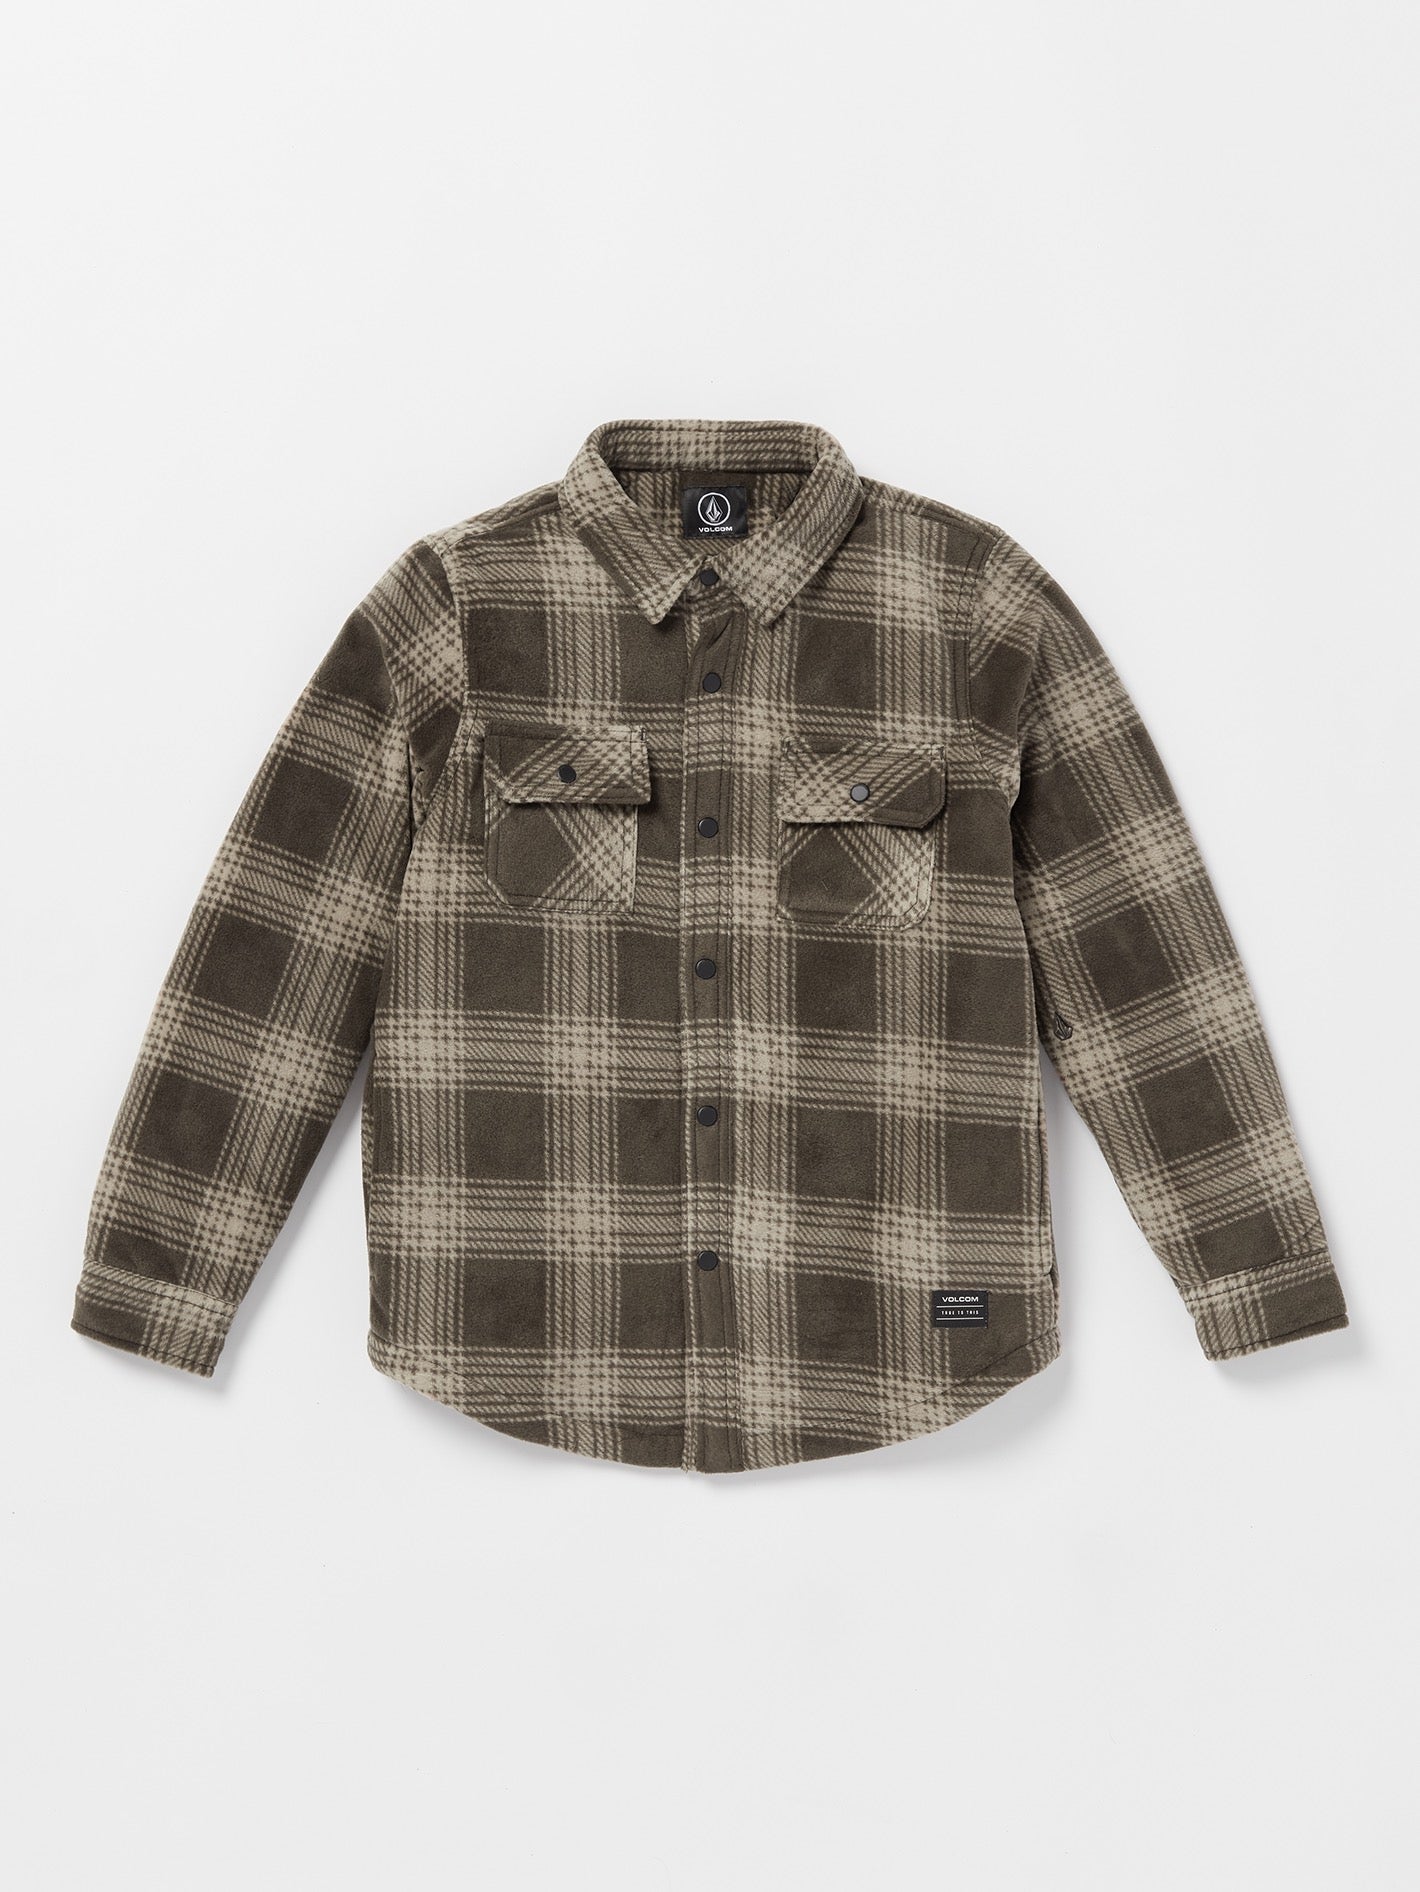 Volcom Flartin Plaid Flannel Shirt, $59, Macy's